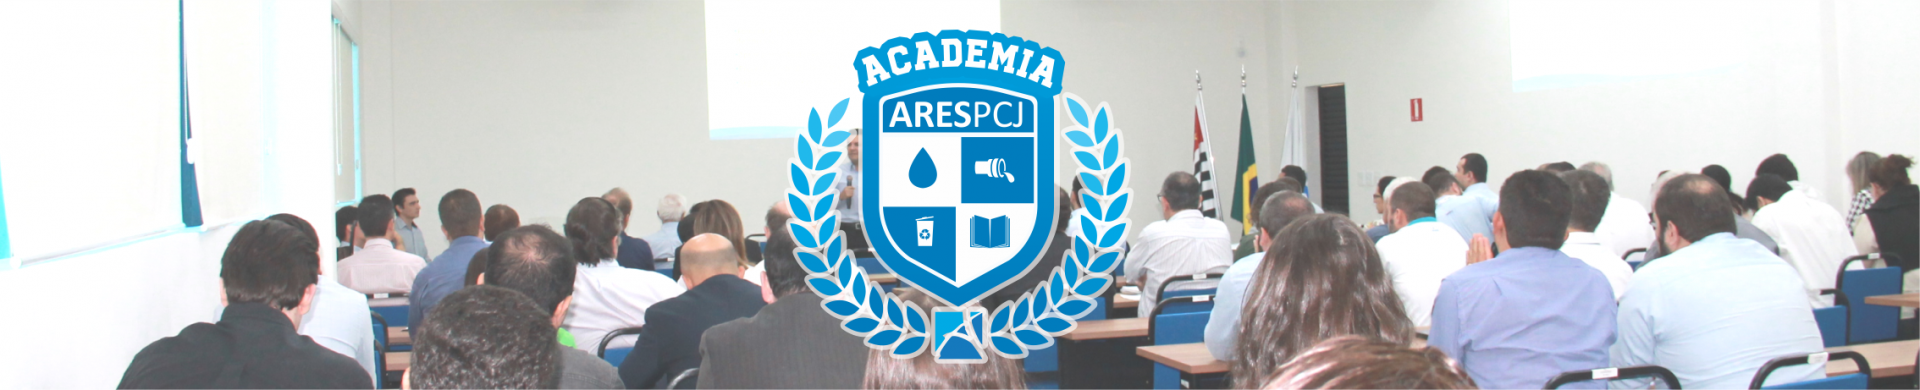 Academia ARES-PCJ